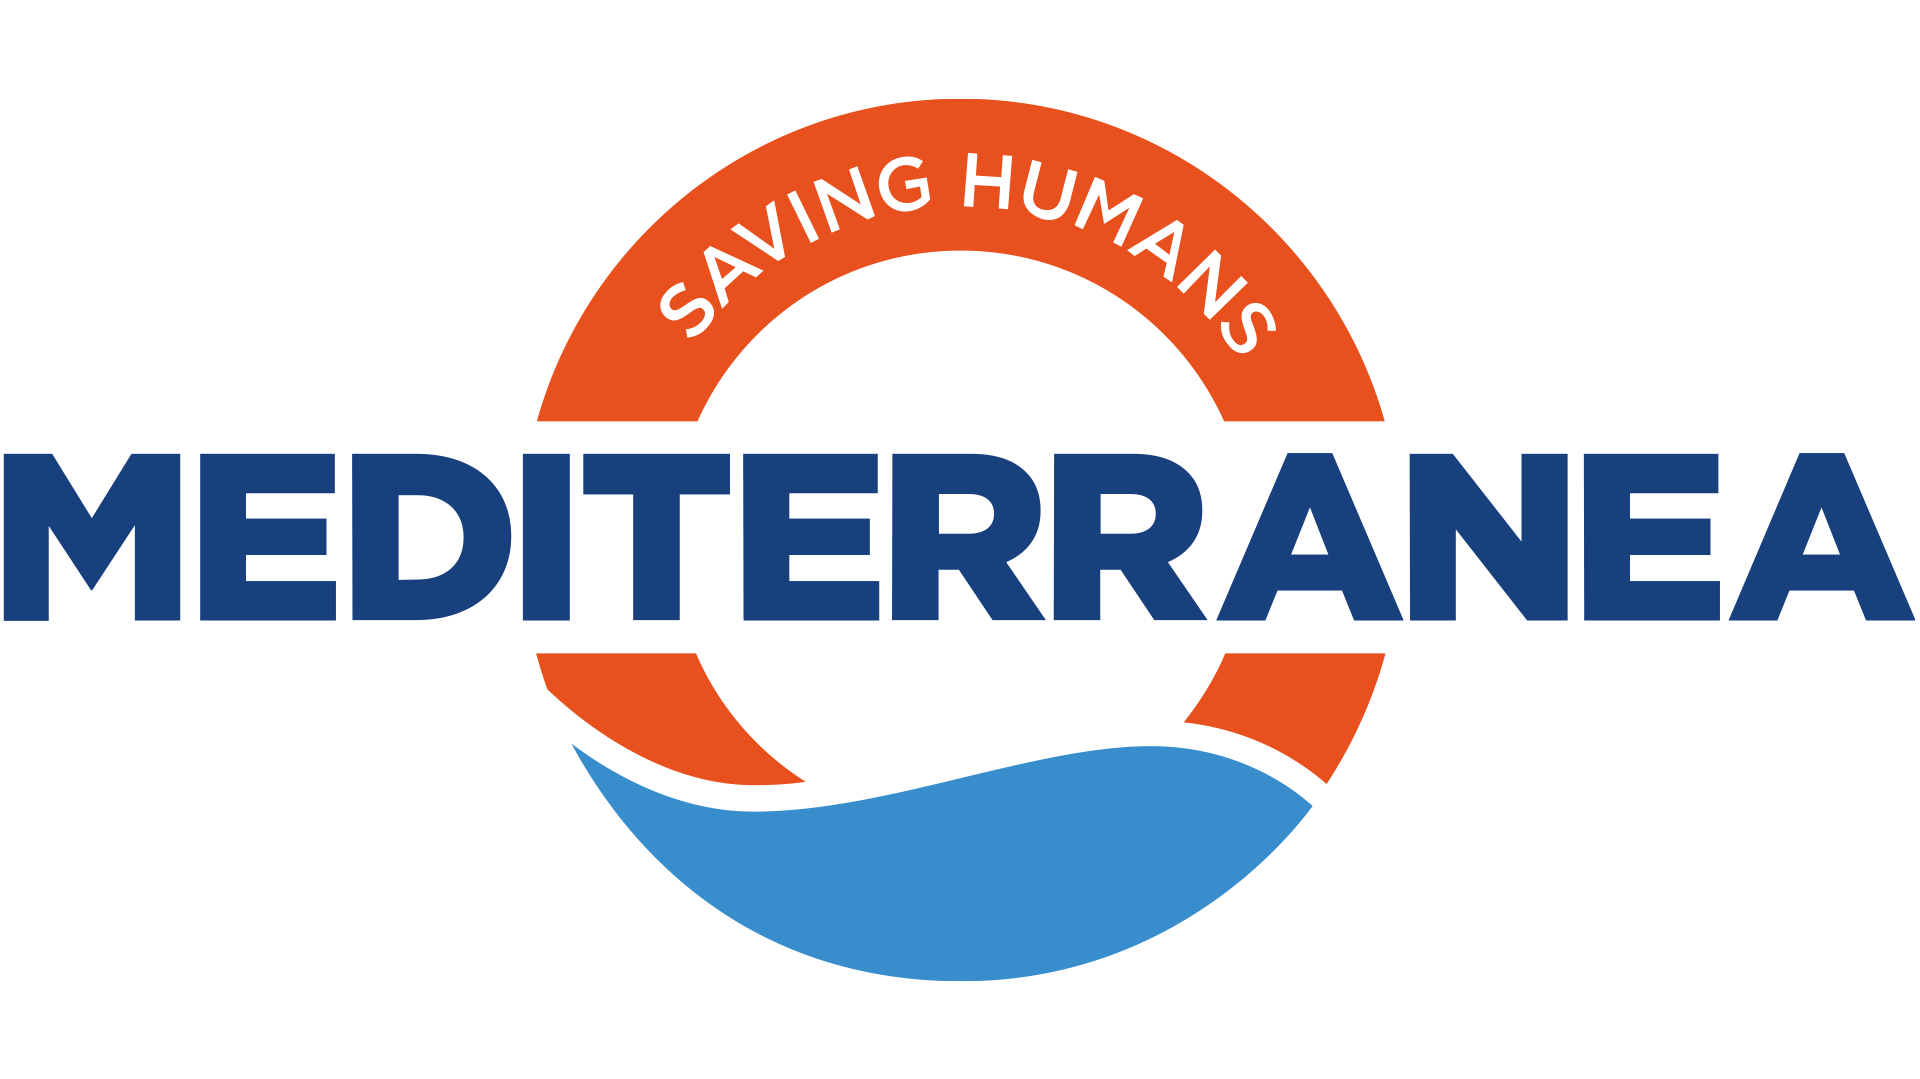 Mediterranea Saving Humans